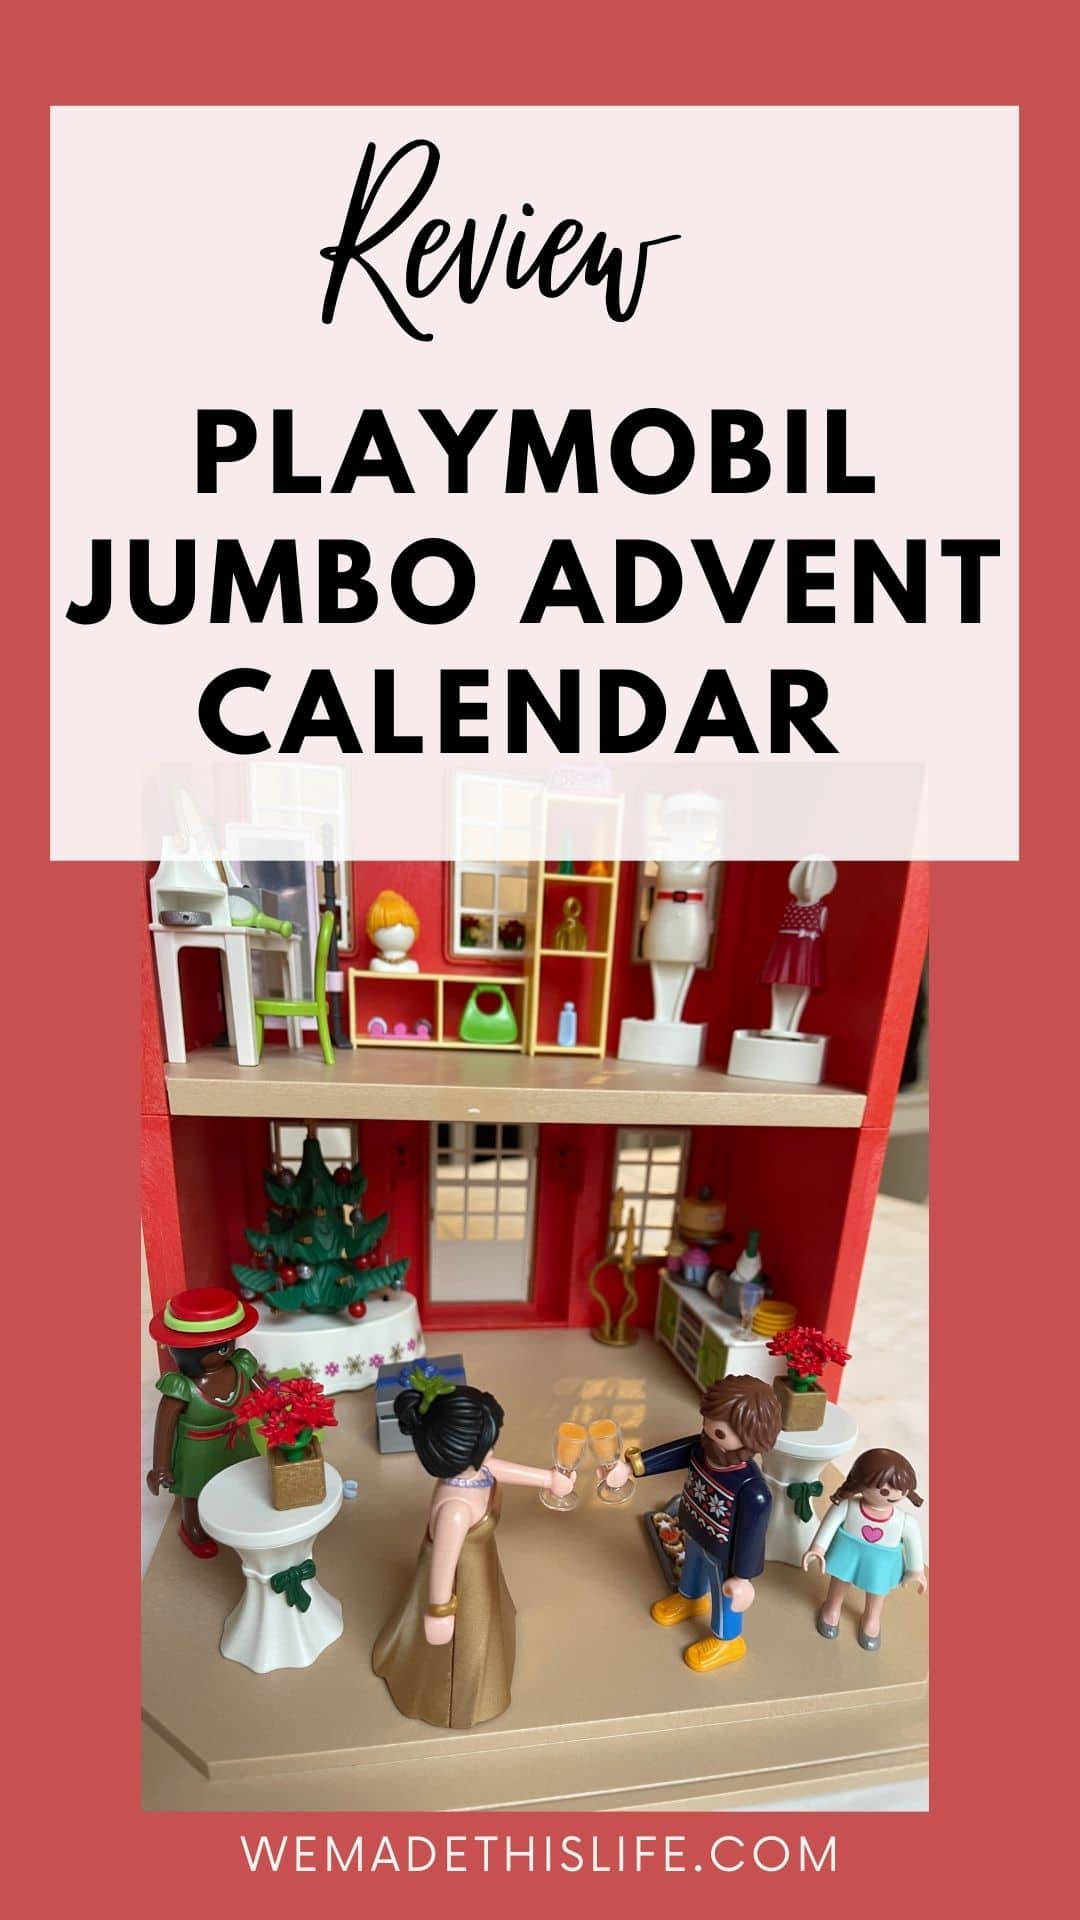 Playmobil Jumbo Advent Calendar Review